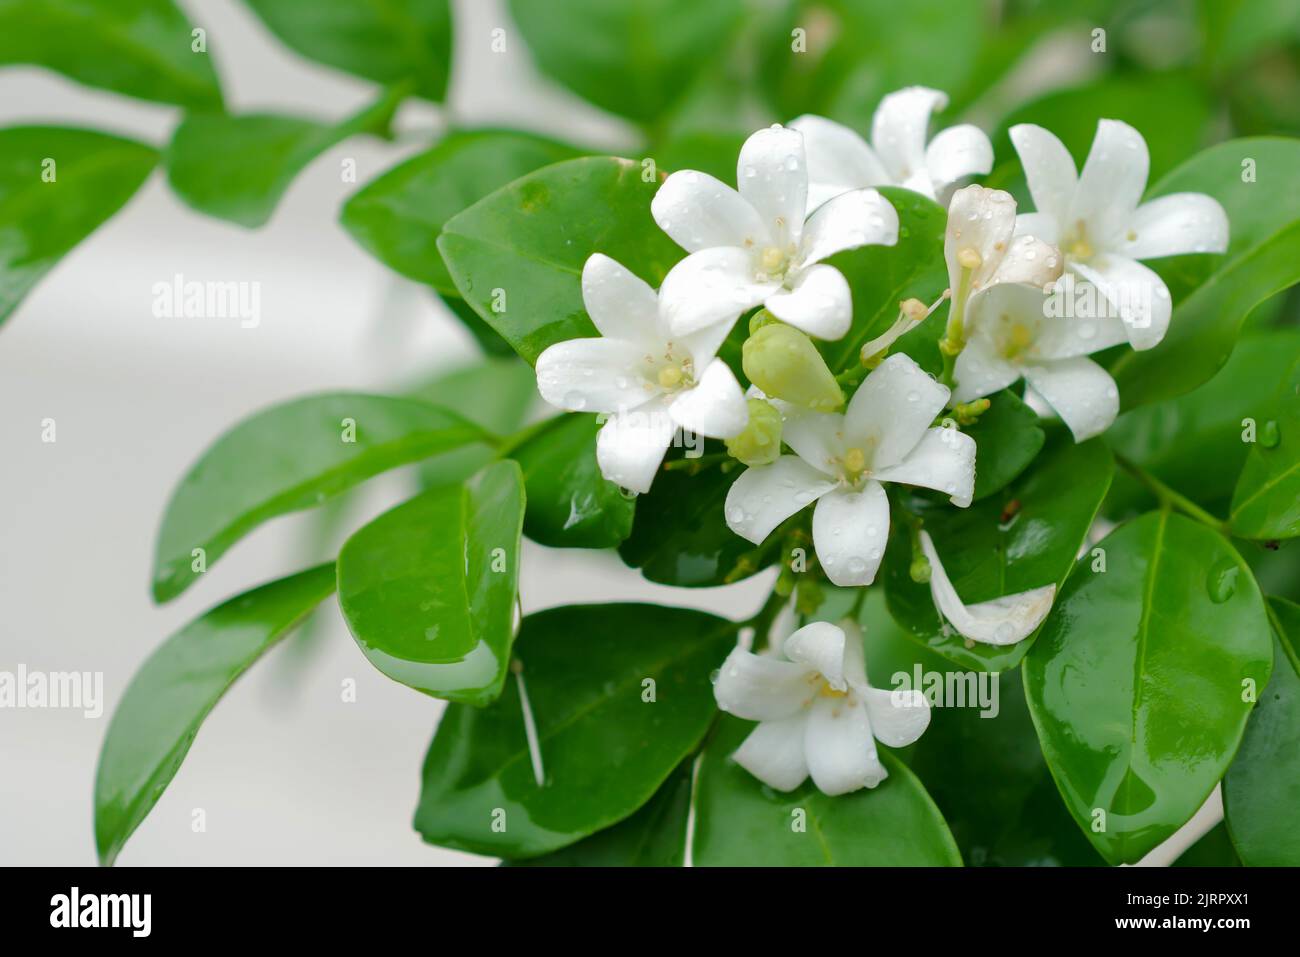 Orange jasmine flowers hi-res stock photography and images - Alamy